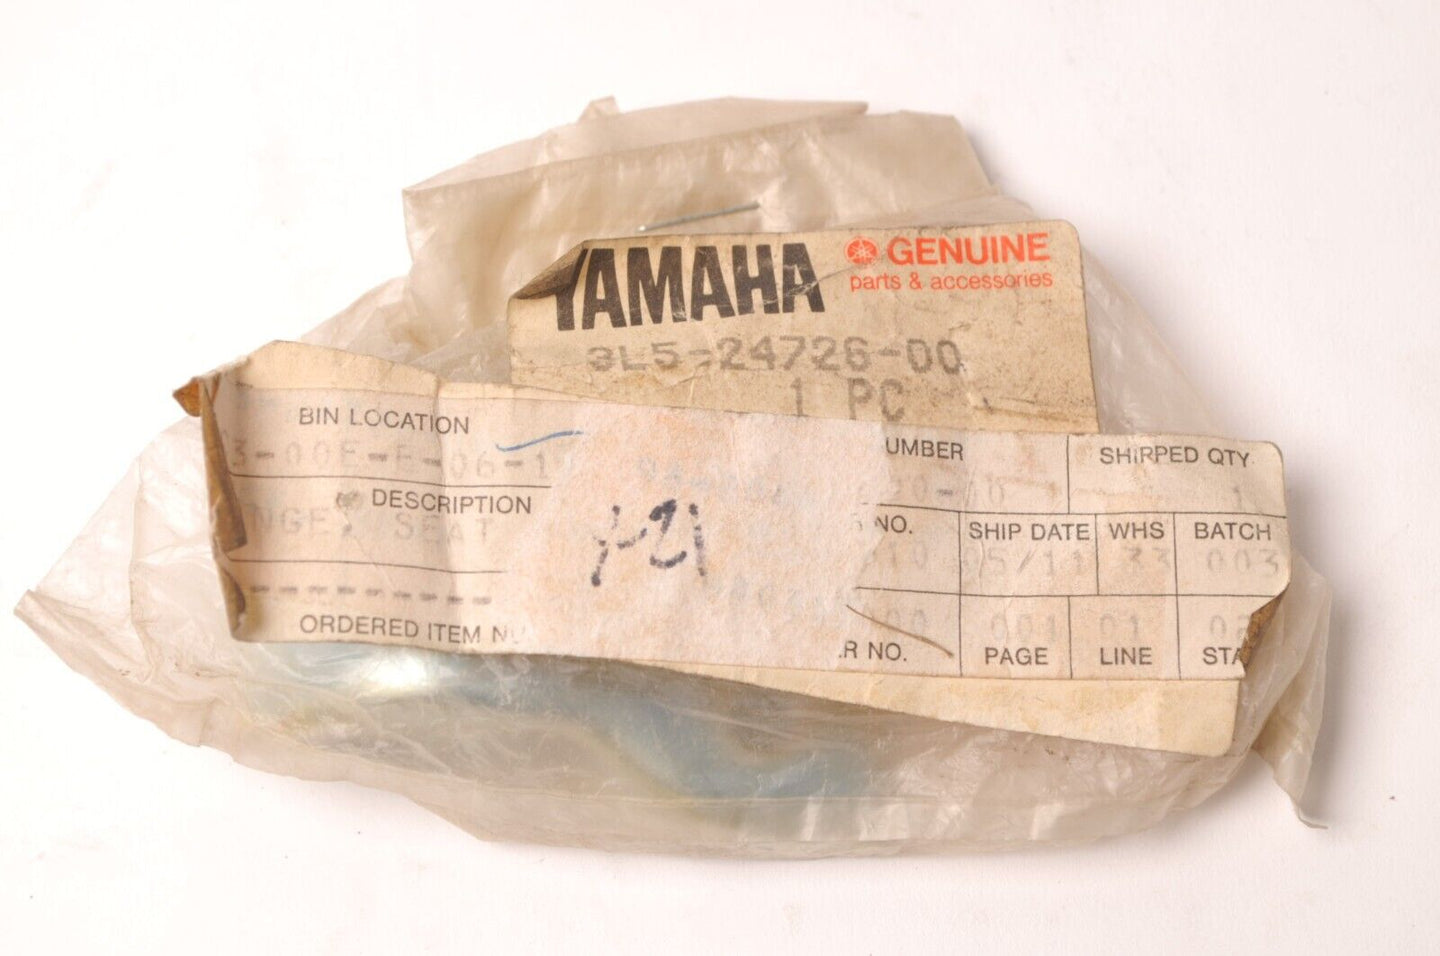 Genuine Yamaha Seat Bracket Hinge QT50 Yamahopper 1979-87  |  3L5-24726-00